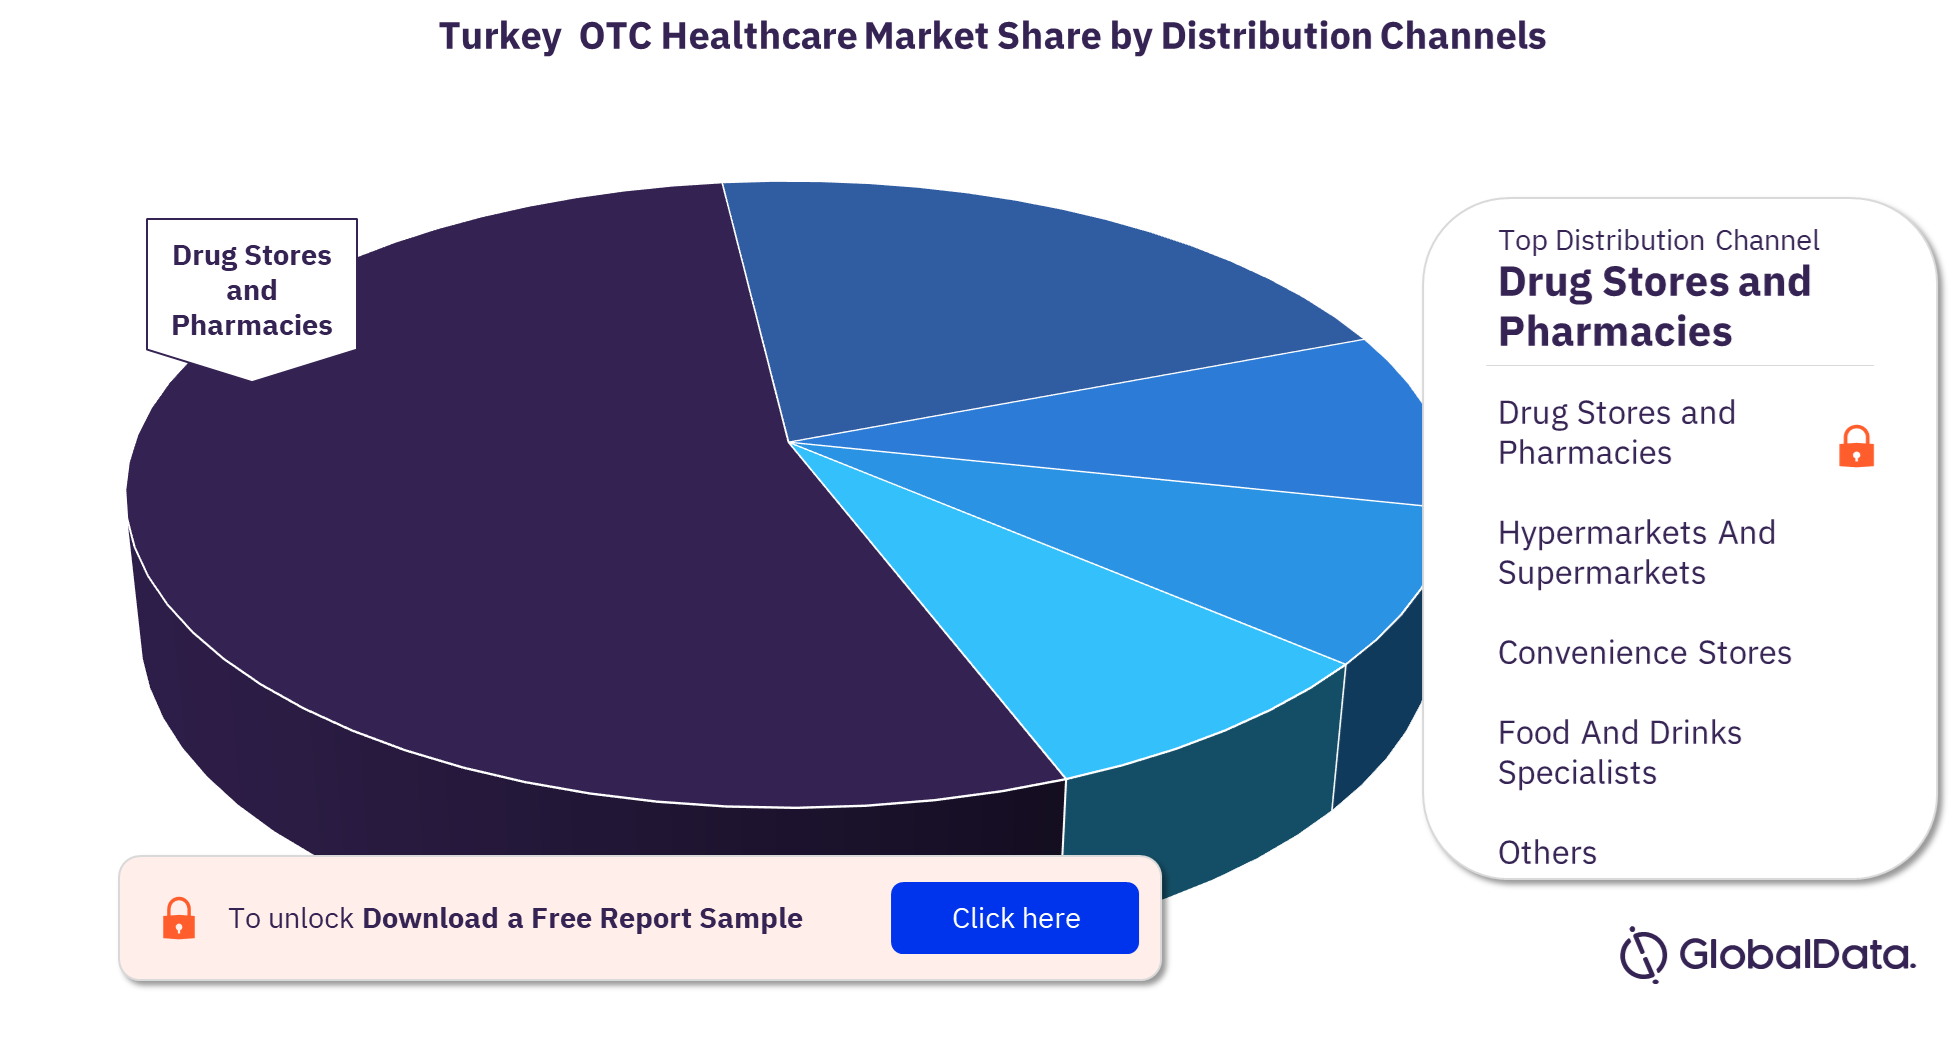 Turkey OTC healthcare market, by distribution channels